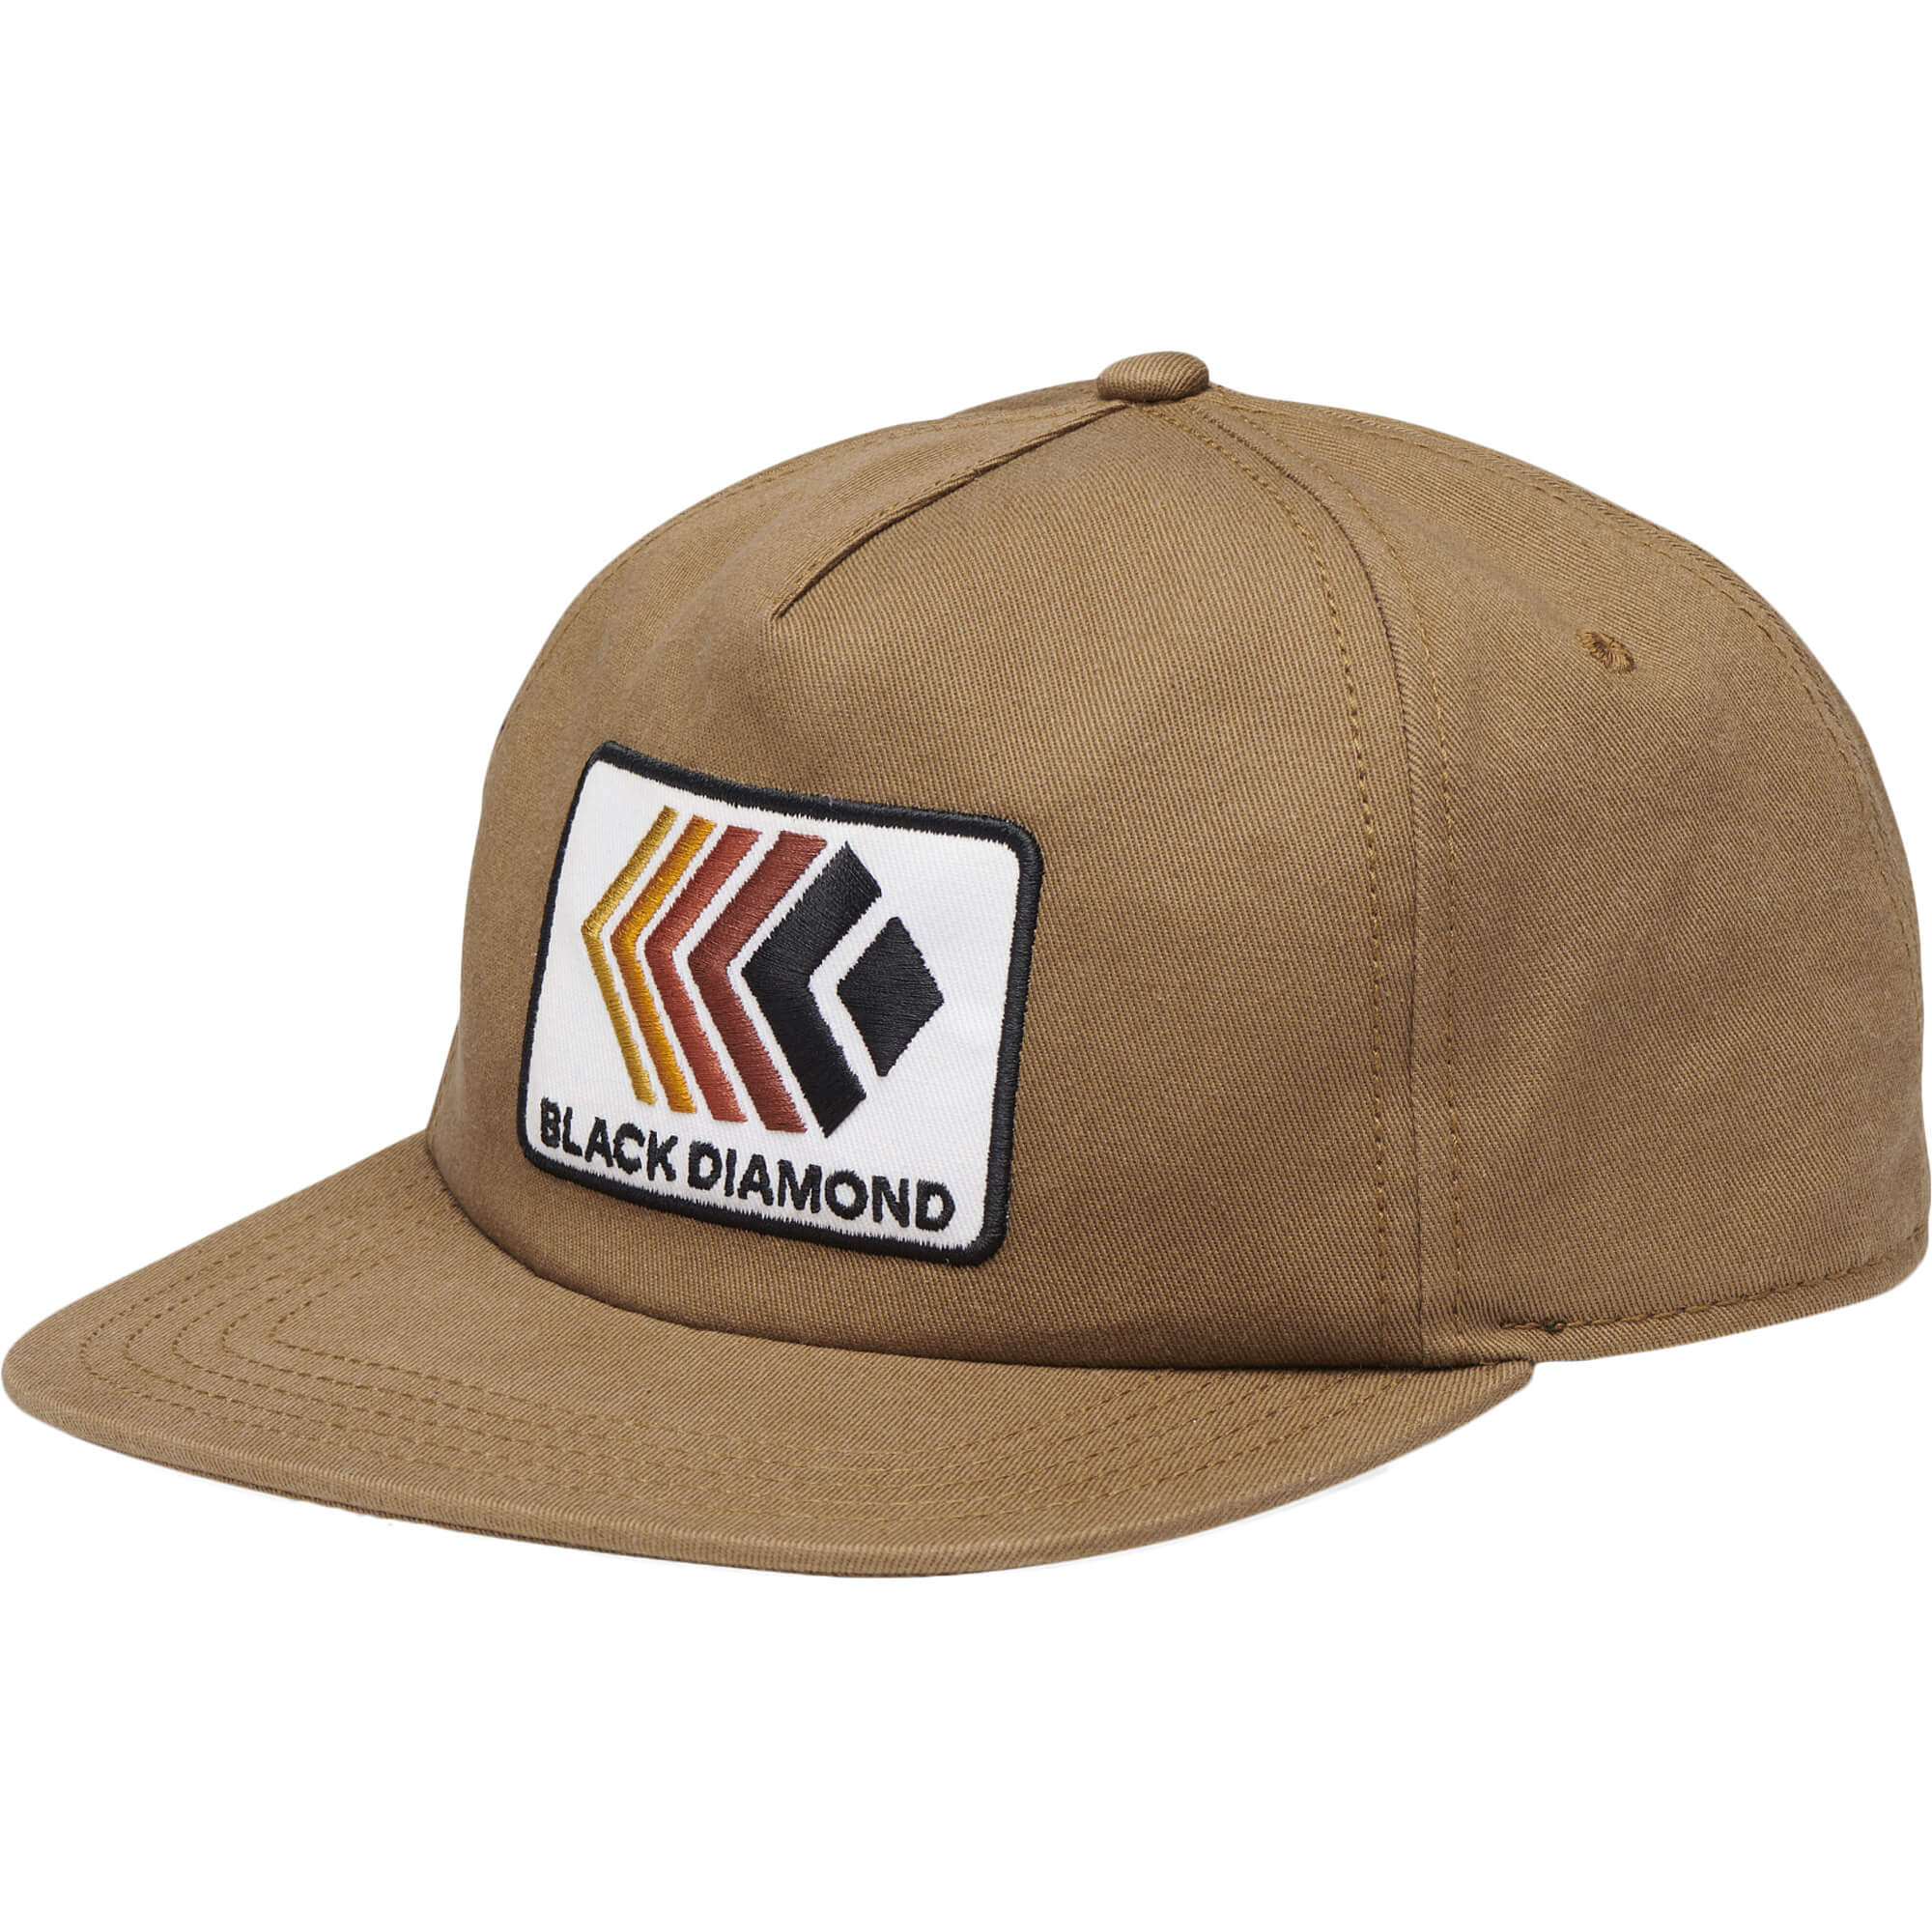 Black Diamond BD Washed Cap Flat Brim Cotton Hat